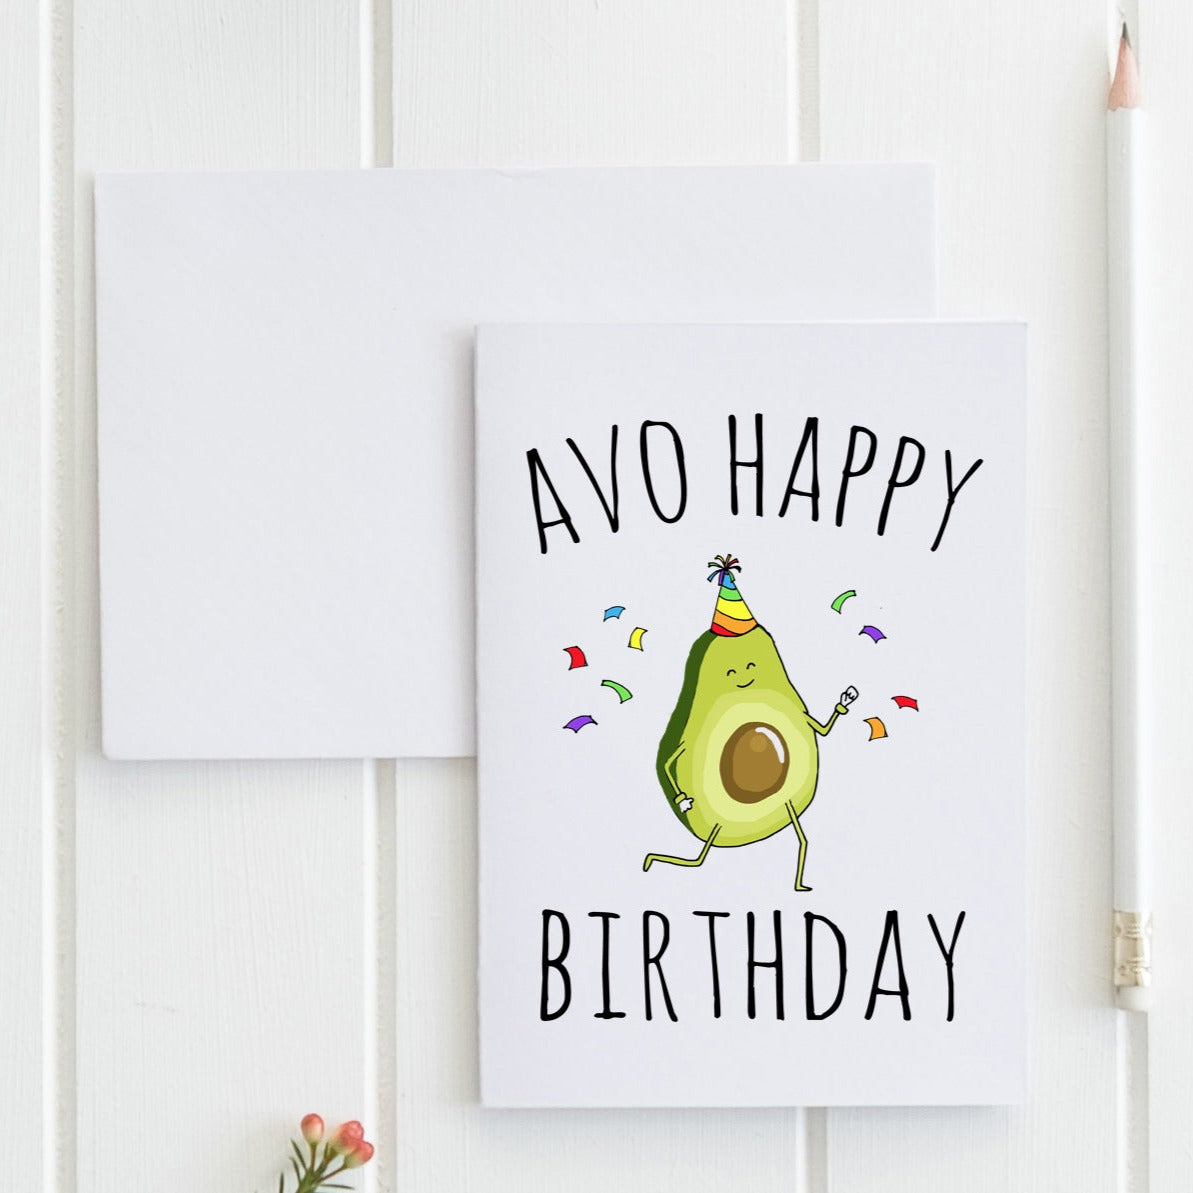 SALE - Avo Happy Birthday - Greeting Card